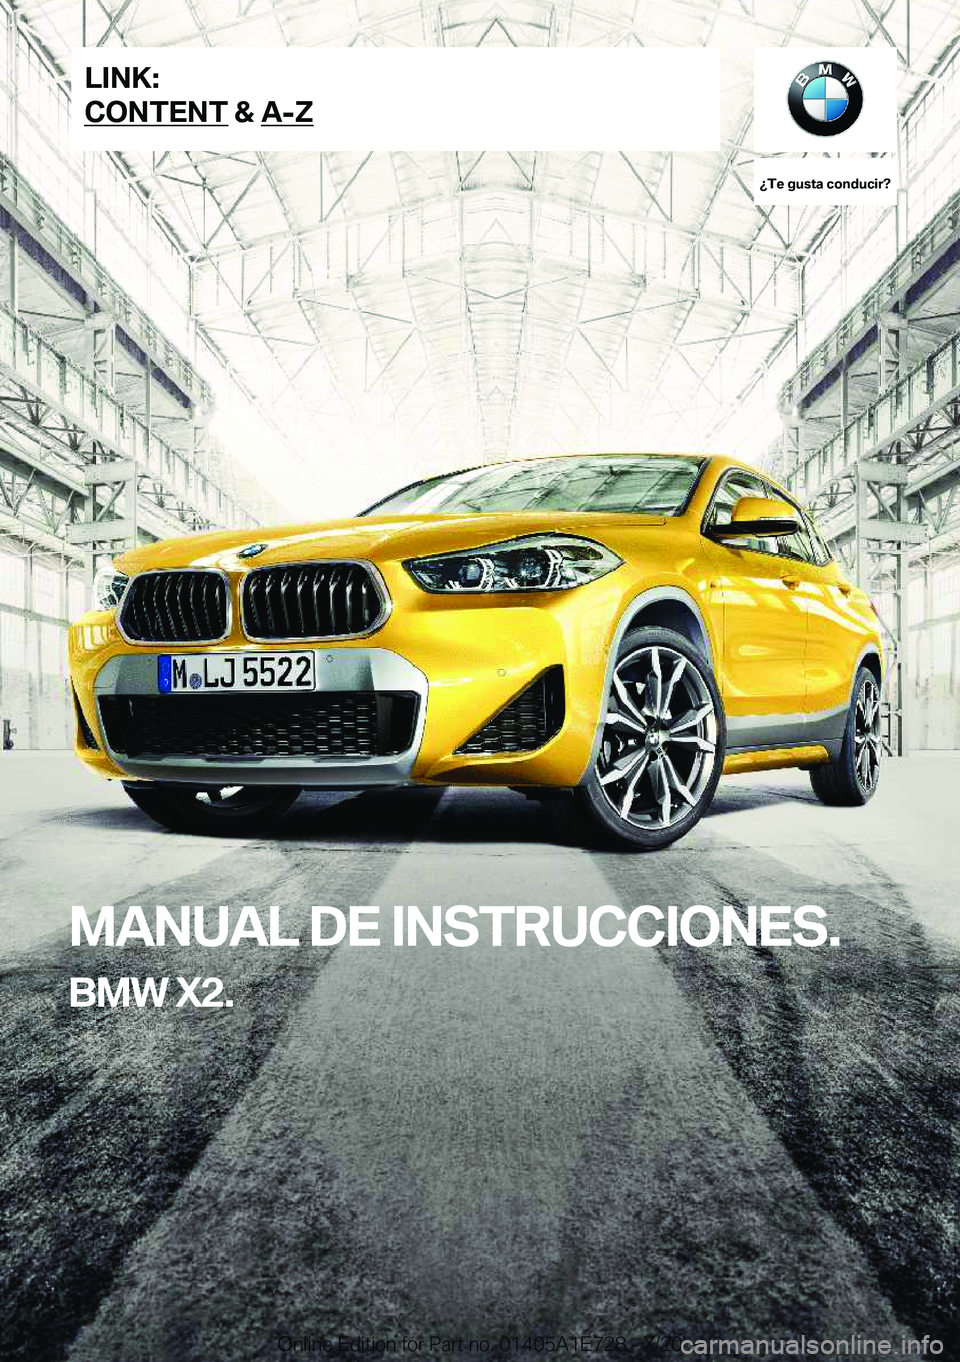 BMW X2 2021  Manuales de Empleo (in Spanish) ��T�e��g�u�s�t�a��c�o�n�d�u�c�i�r� 
�M�A�N�U�A�L��D�E��I�N�S�T�R�U�C�C�I�O�N�E�S�.
�B�M�W��X�2�.�L�I�N�K�:
�C�O�N�T�E�N�T��&��A�-�Z�O�n�l�i�n�e��E�d�i�t�i�o�n��f�o�r��P�a�r�t��n�o�.��0�1�